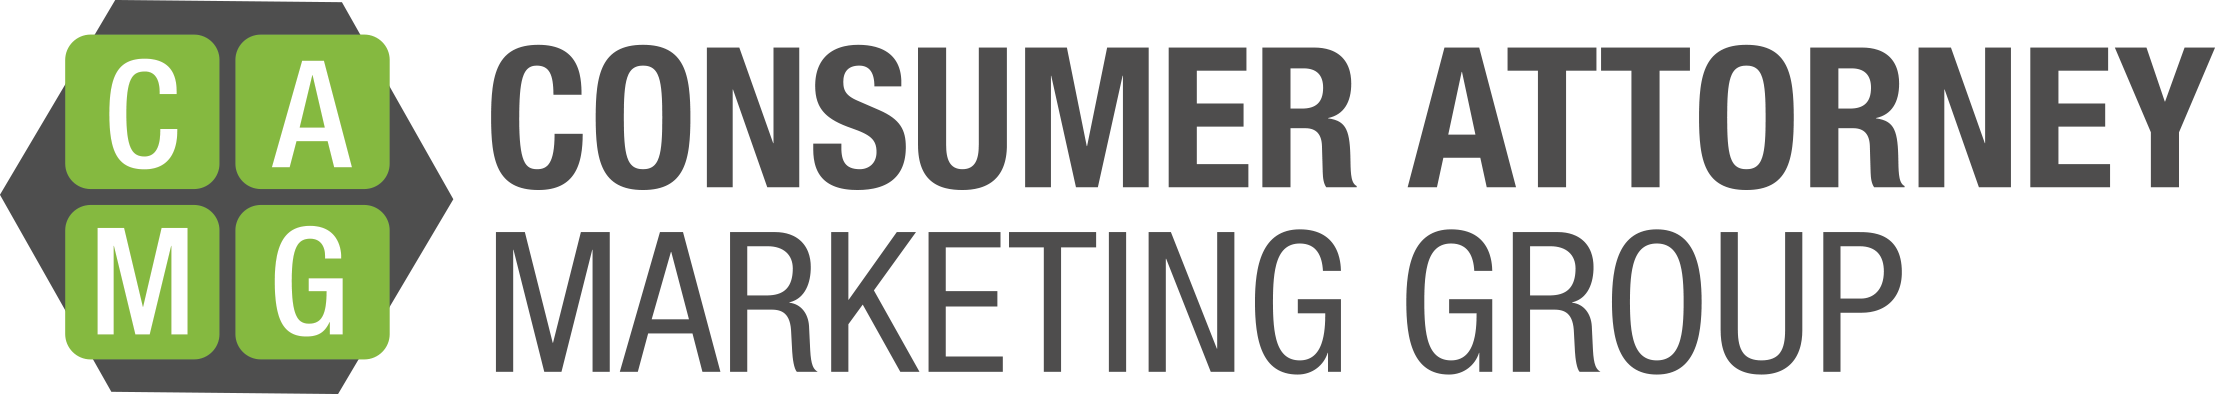 Consumer Atty Marketing Grp Logo